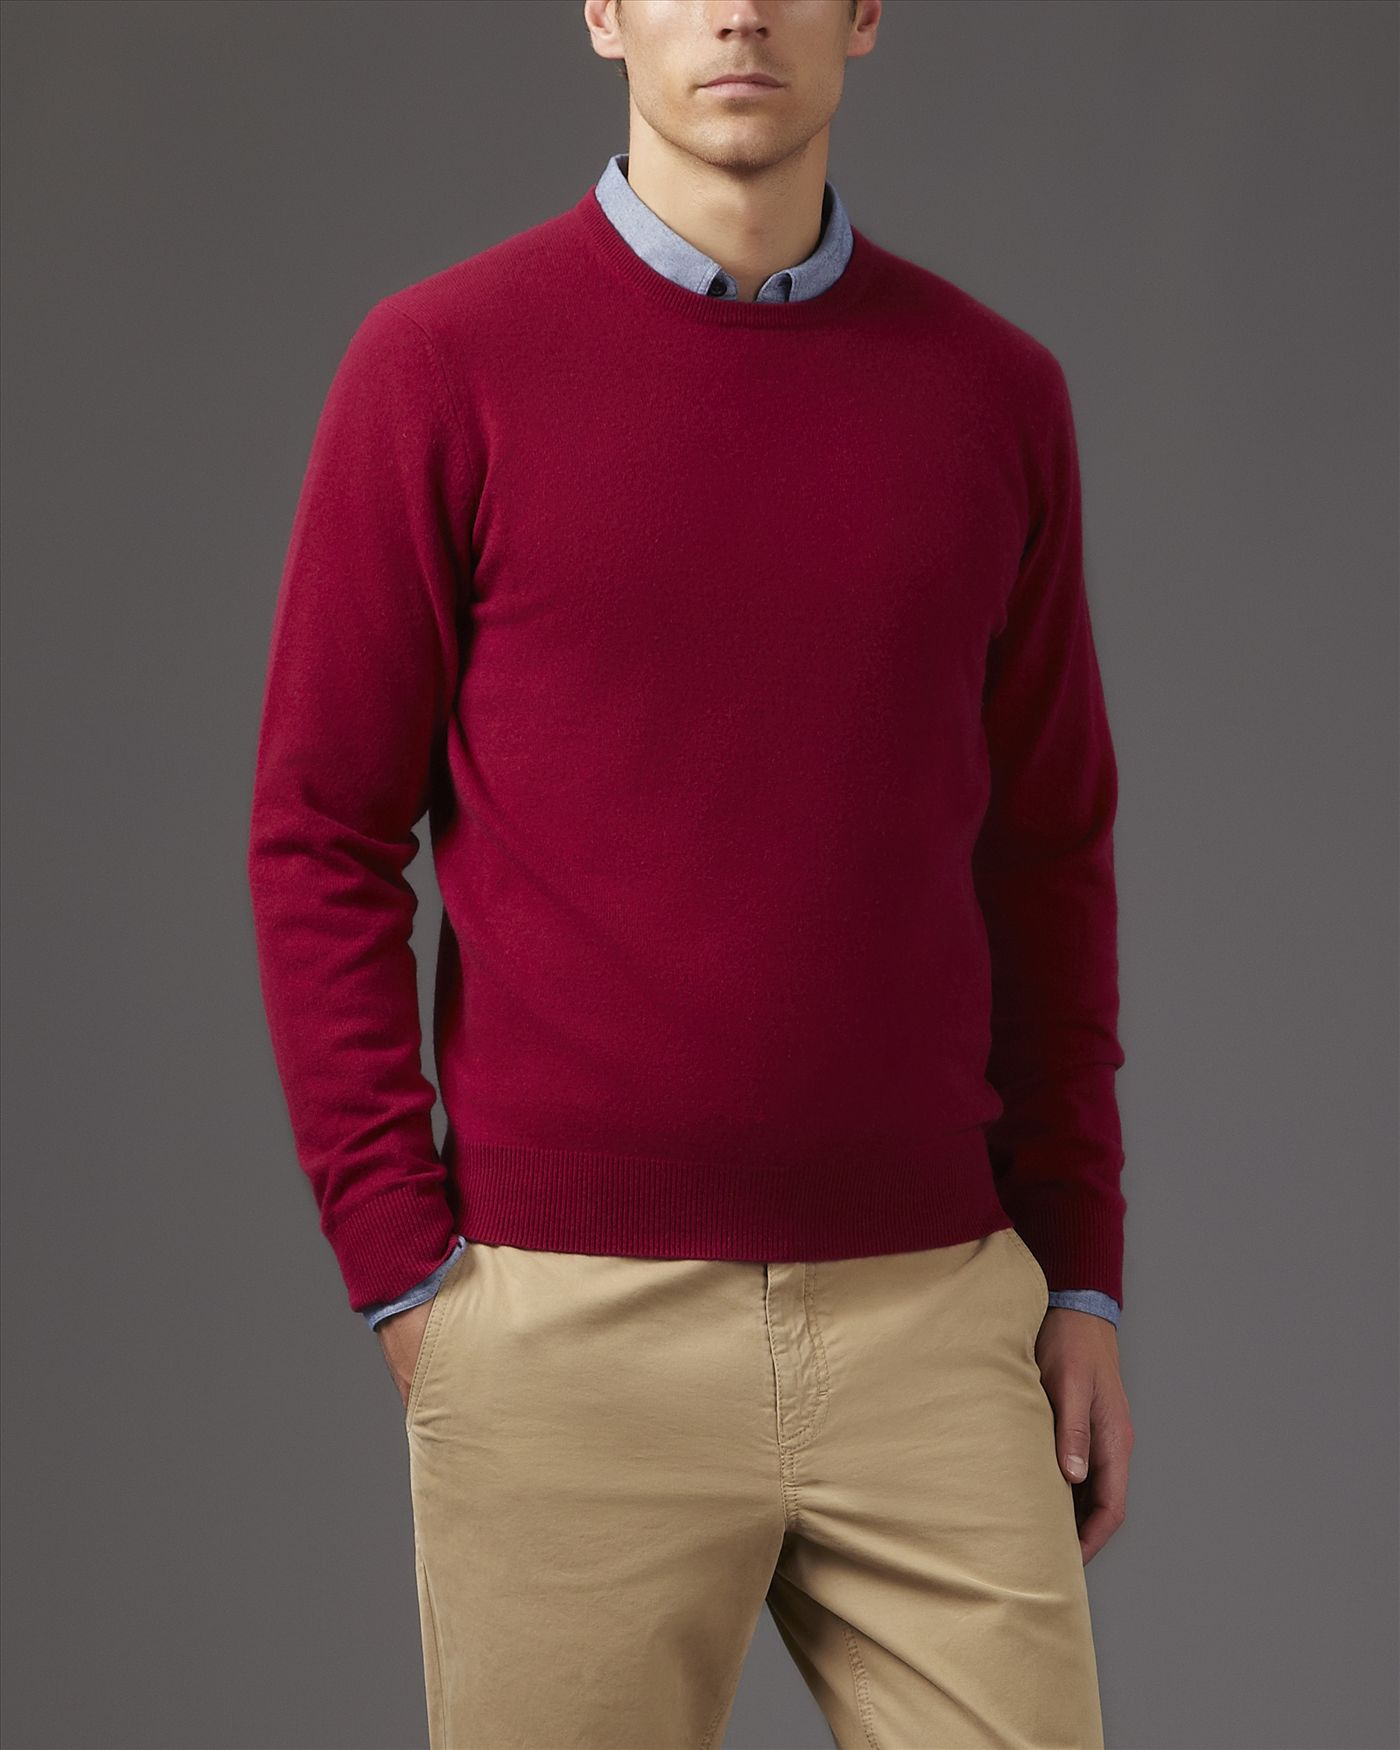 Jaeger Cashmere Crew Neck Sweater in Pink for Men (Dark Pink) | Lyst